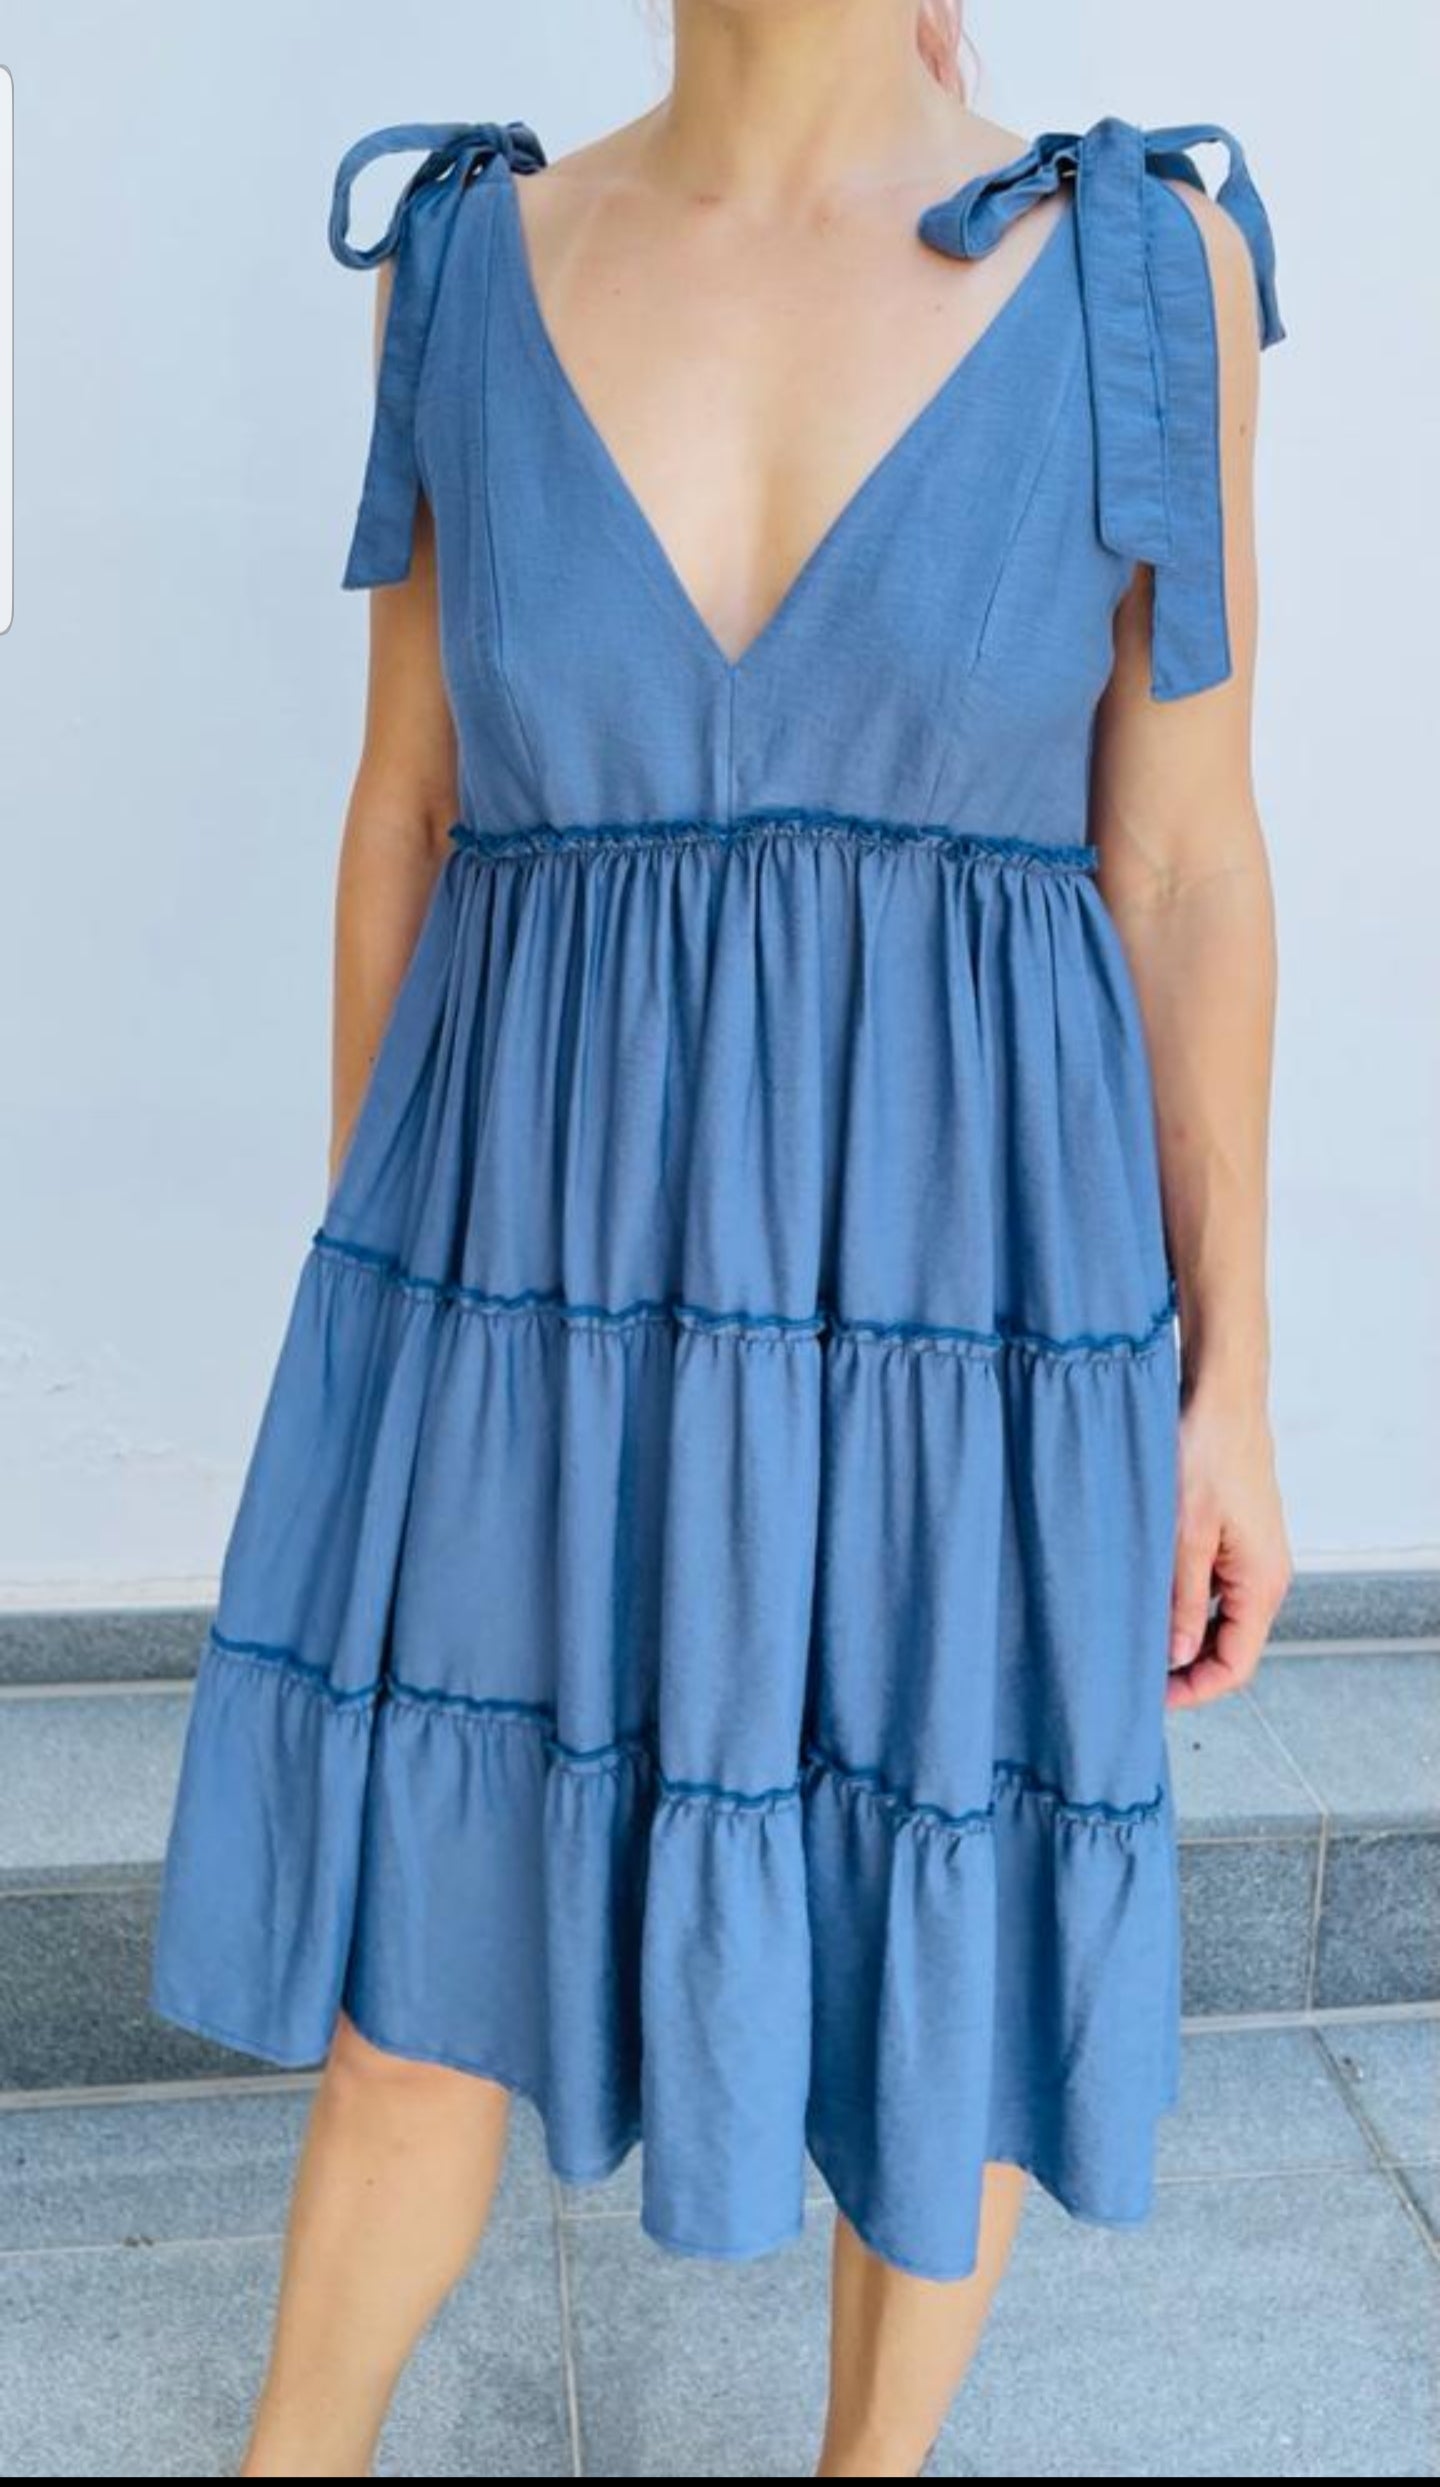 Midi A Line Dress With Ties On Shoulders-Dress-Secret Closet